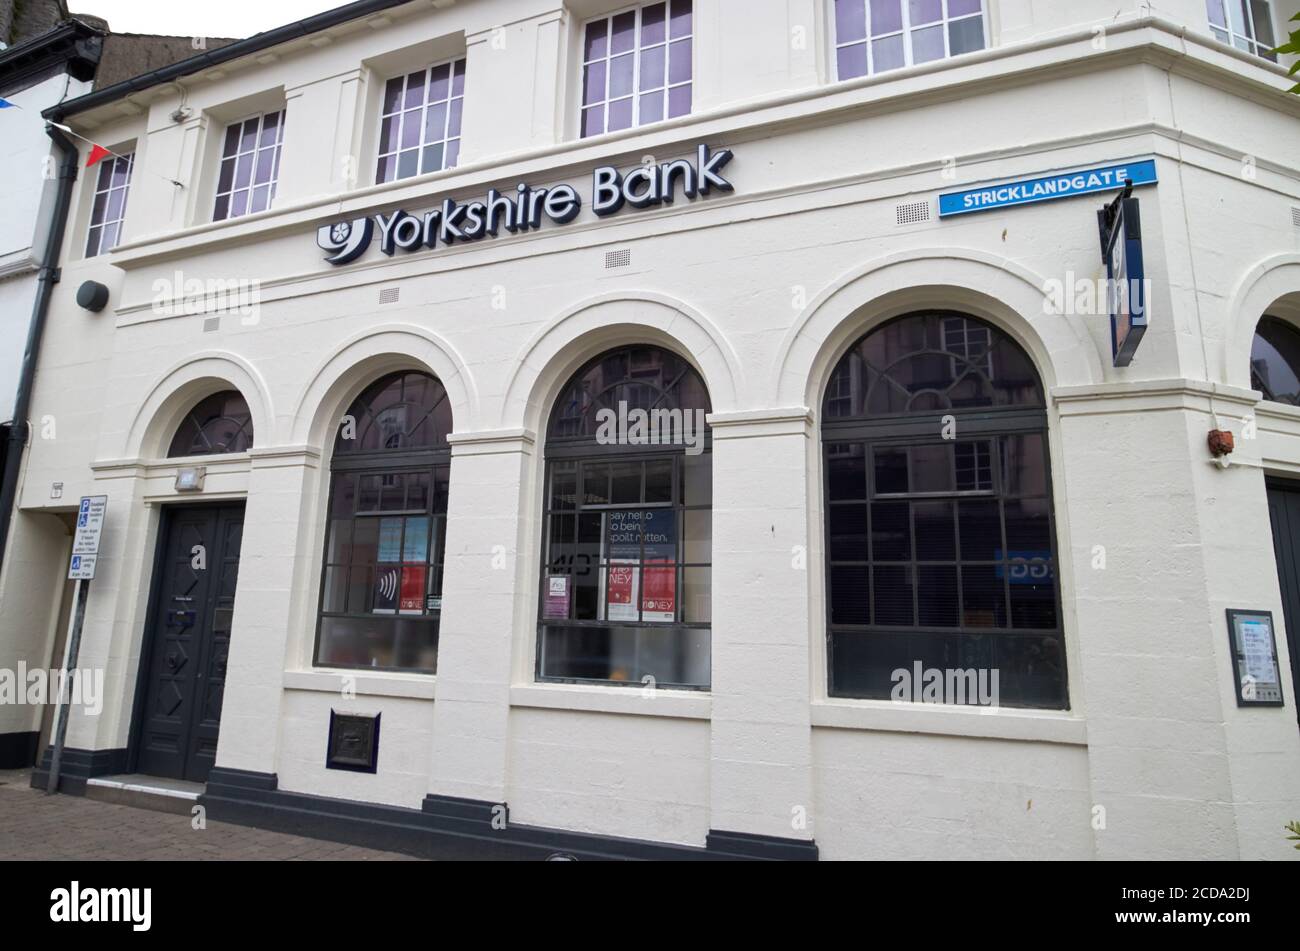 yorkshire Bankfiliale auf stricklandgate Kendal cumbria england großbritannien Stockfoto